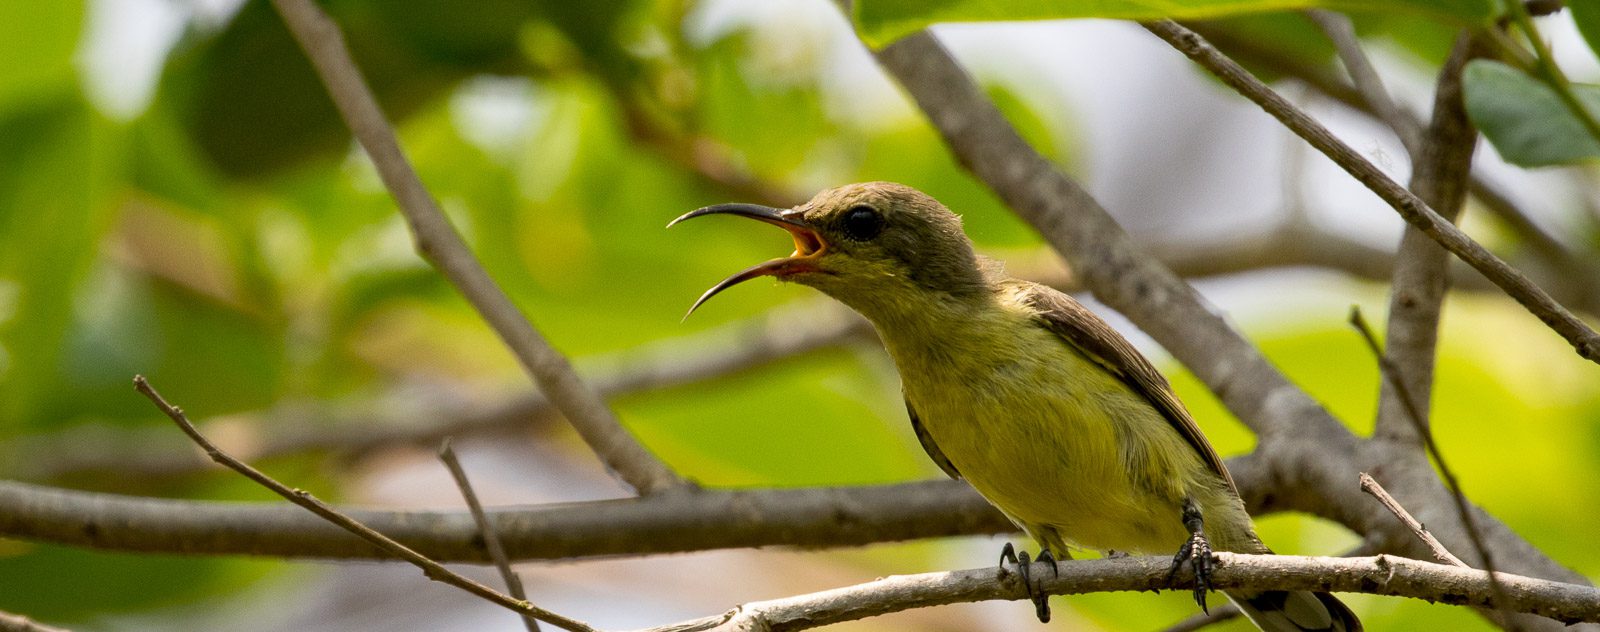 Olive Backed Sunbird in Tangkoko National Park